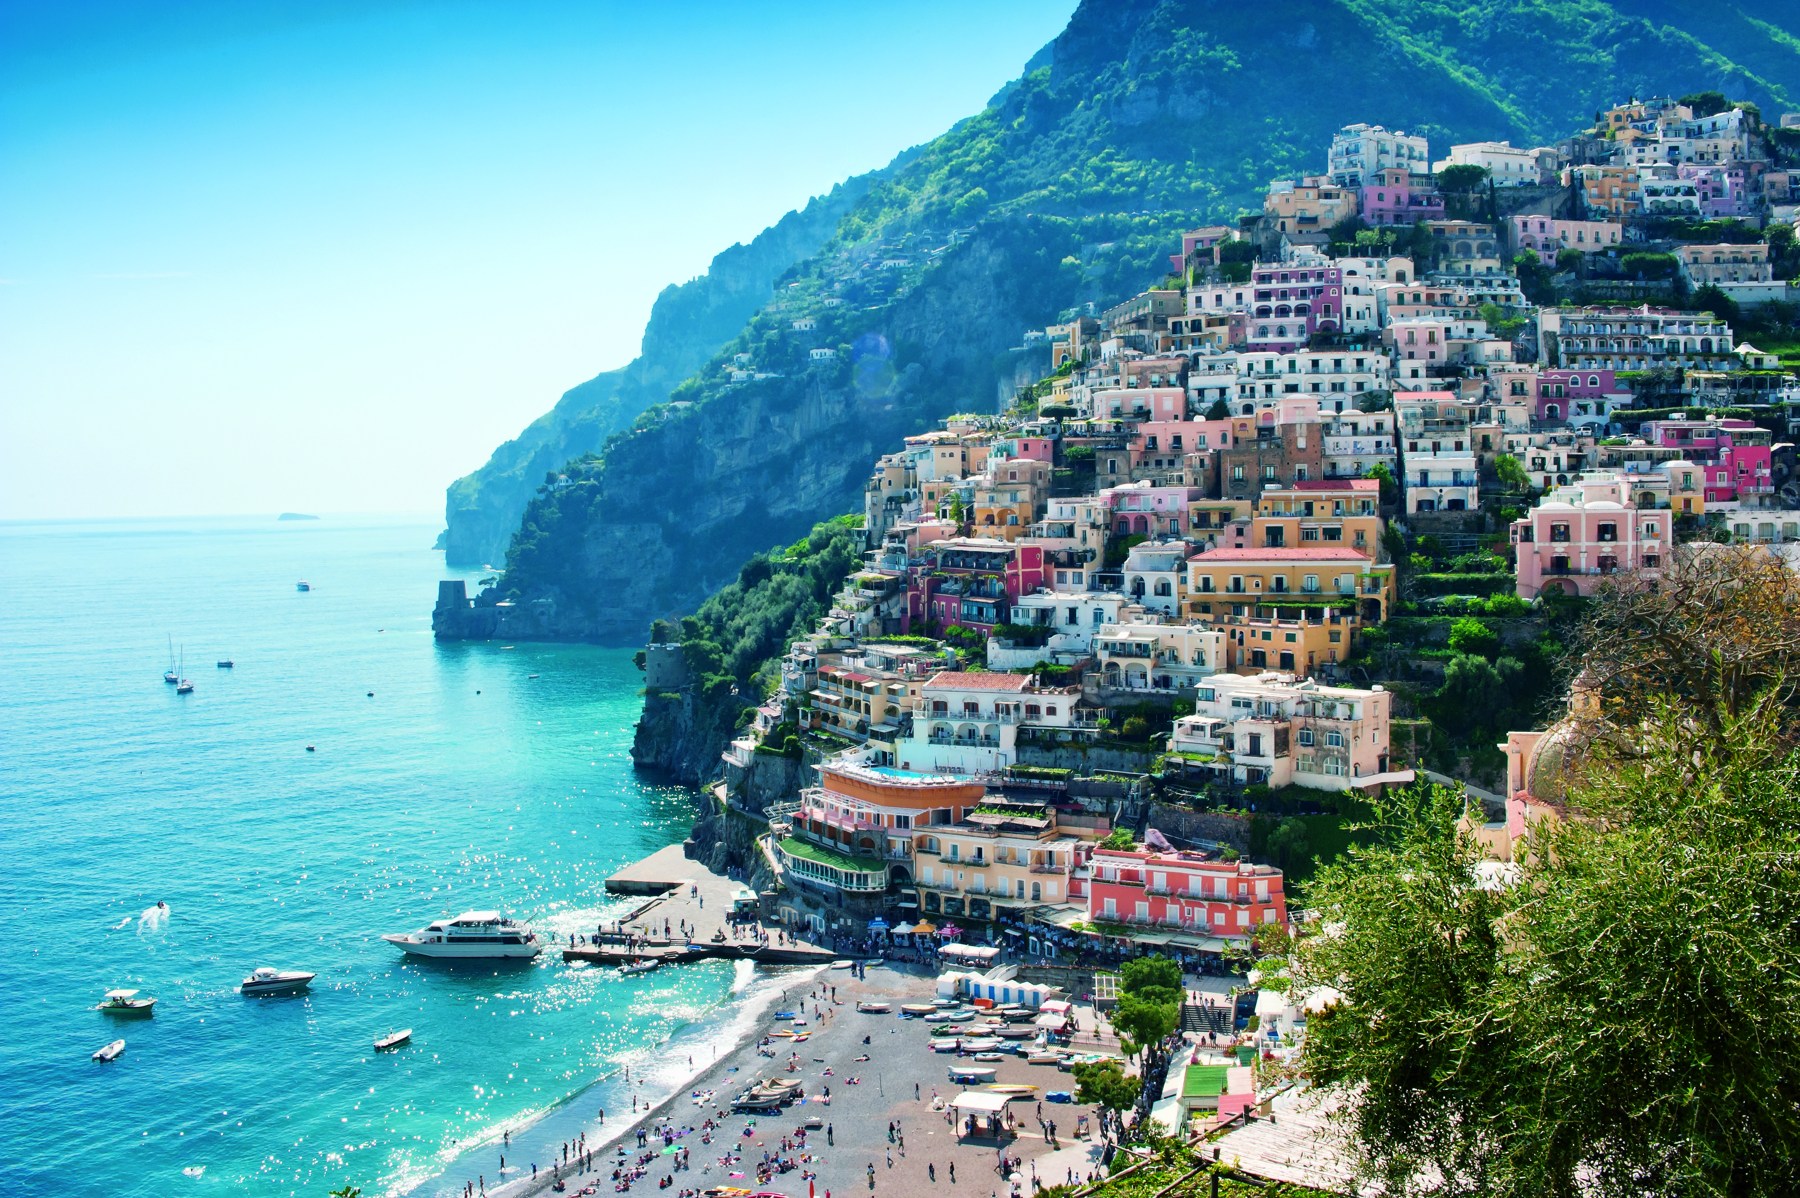 Belmond Hotel Caruso, Amalfi Coast, Luxury Hotels in Italy